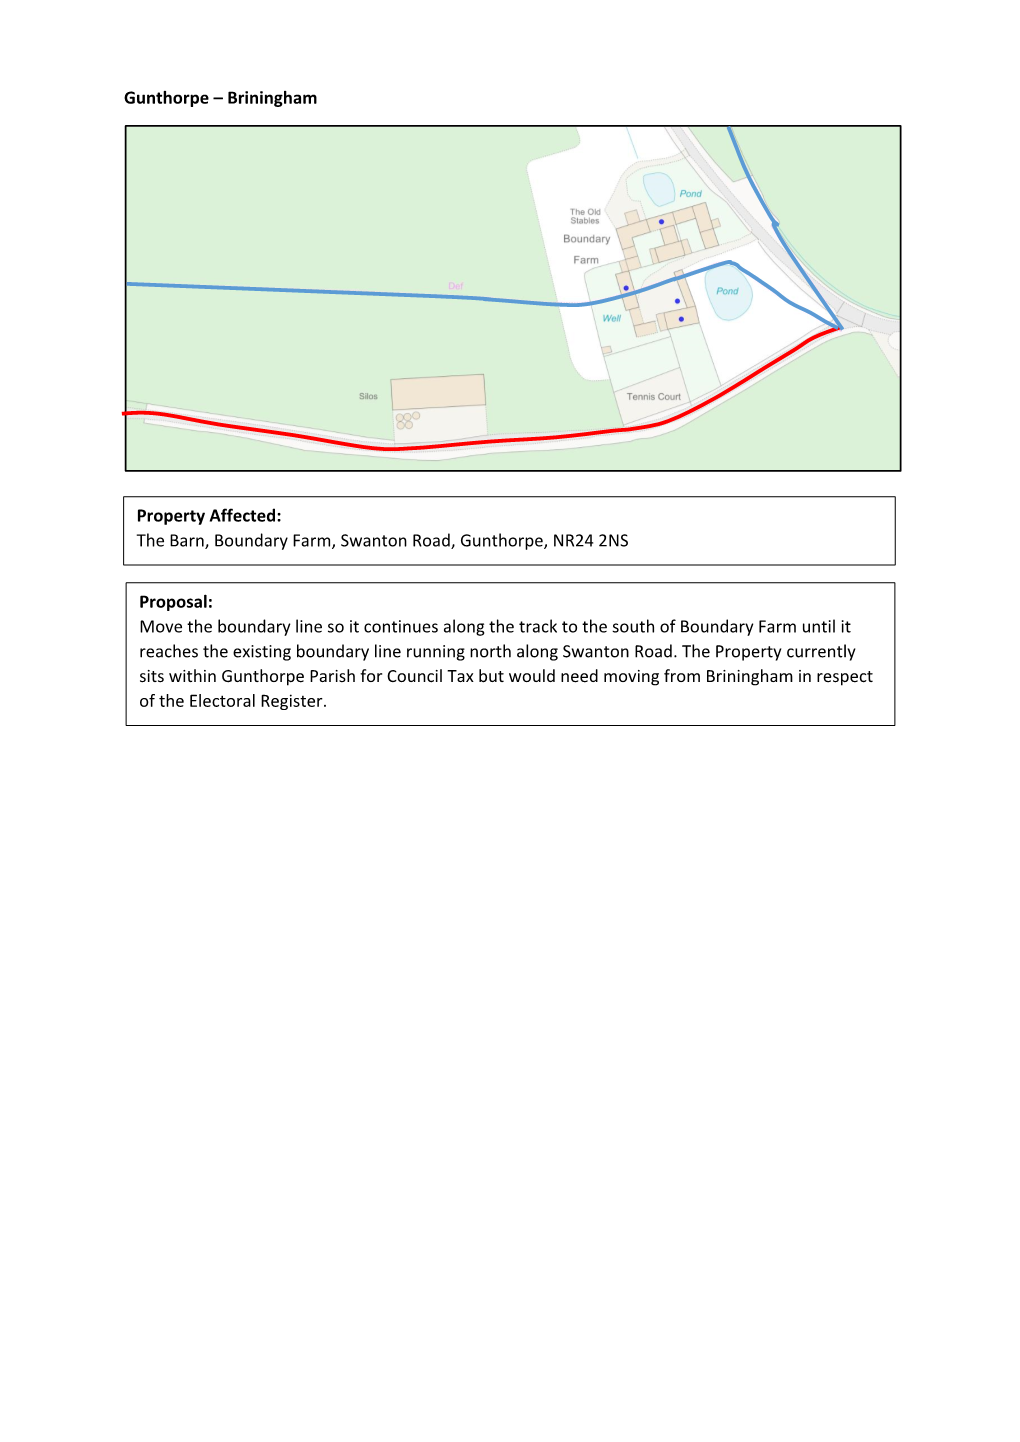 Gunthorpe – Briningham Property Affected: the Barn, Boundary Farm